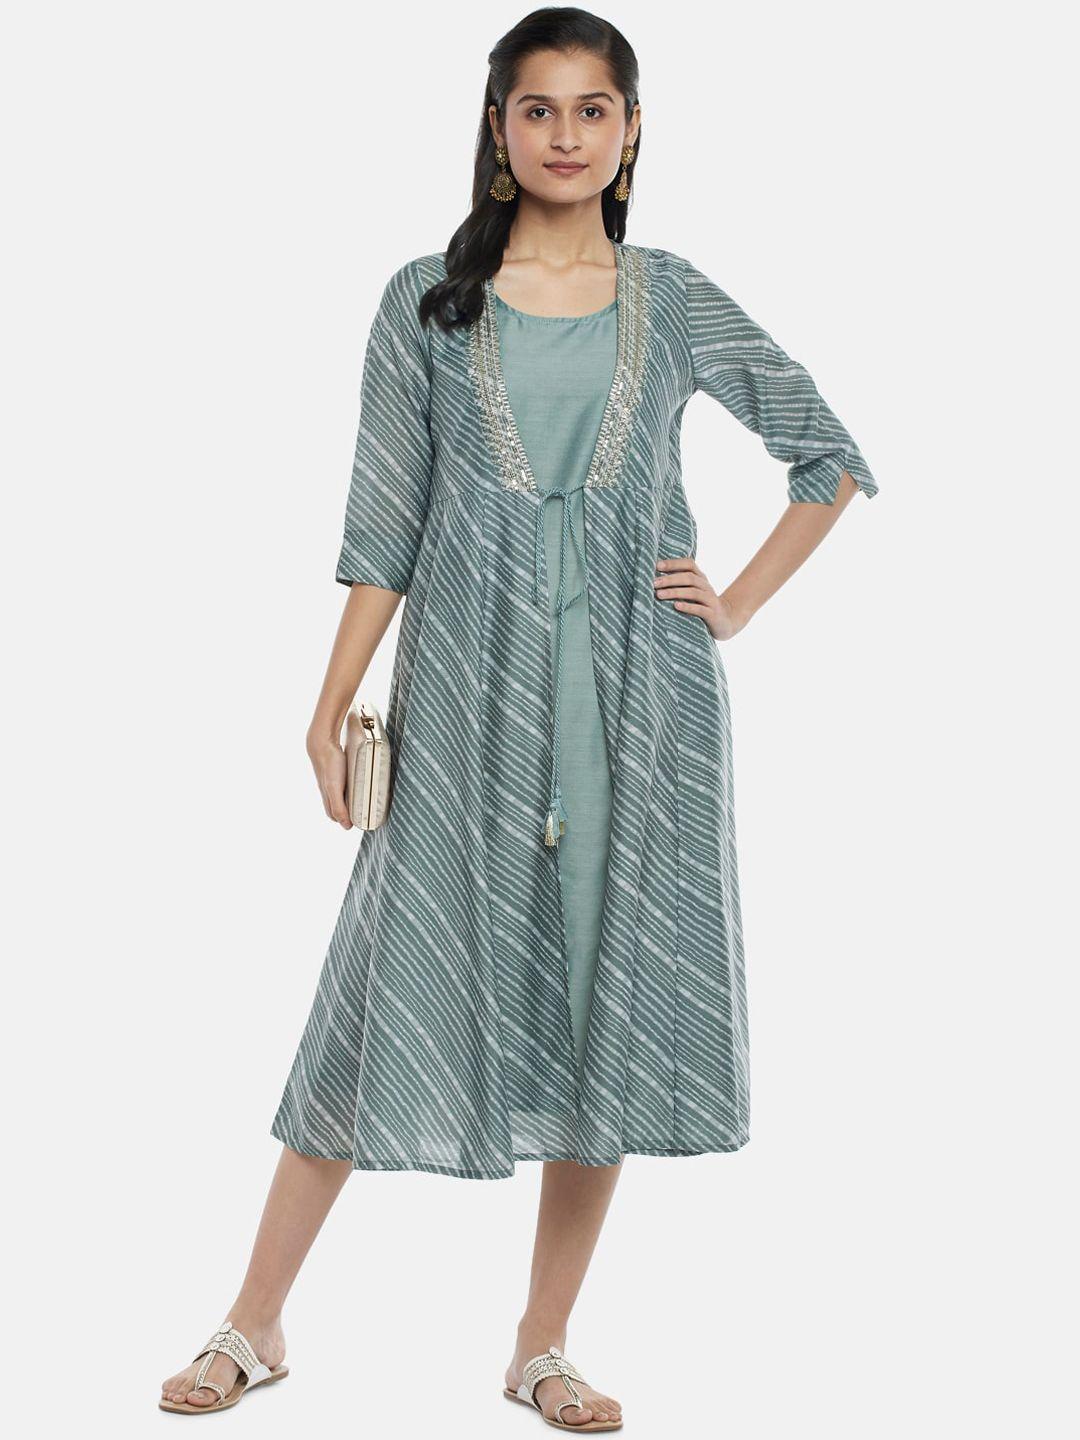 rangmanch-by-pantaloons-green-striped-layered-ethnic-a-line-midi-dress